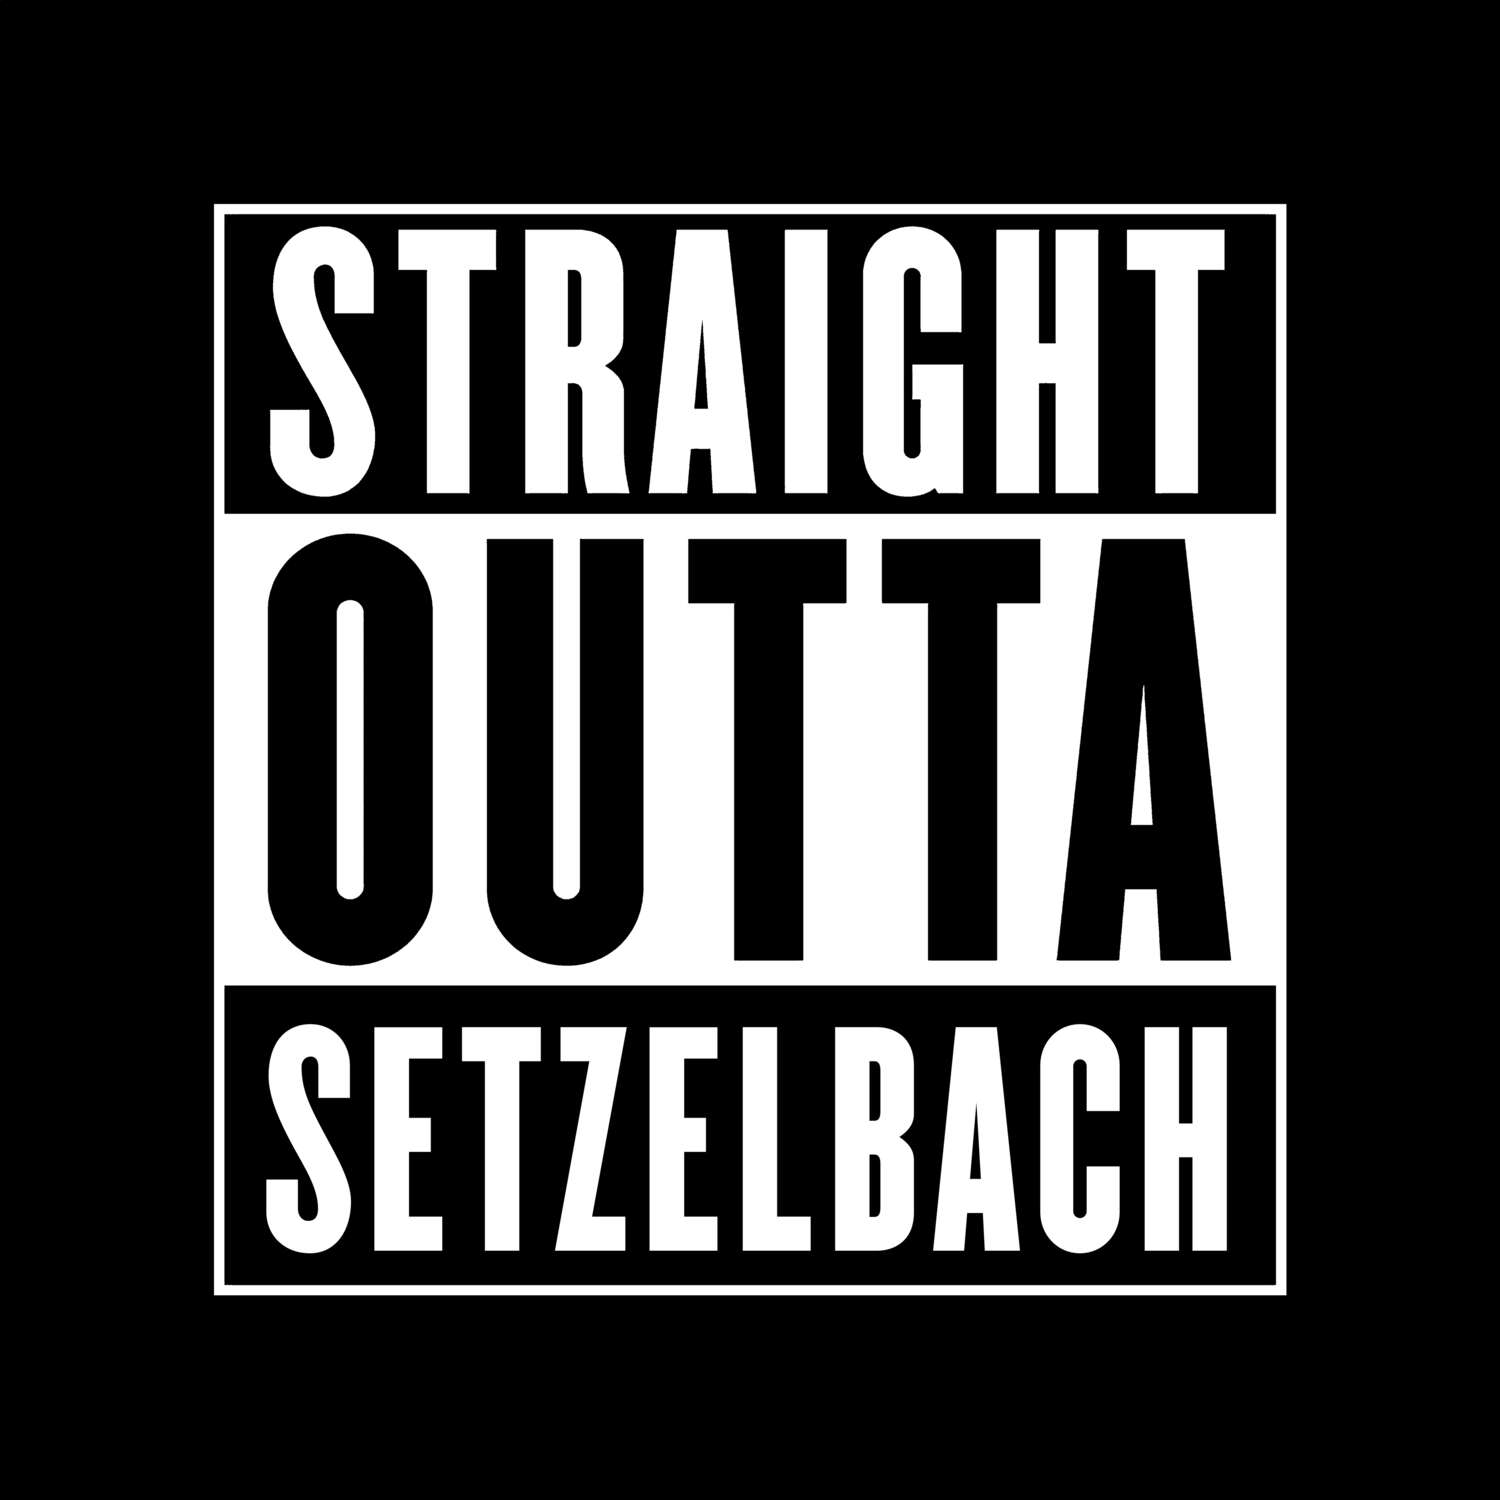 Setzelbach T-Shirt »Straight Outta«